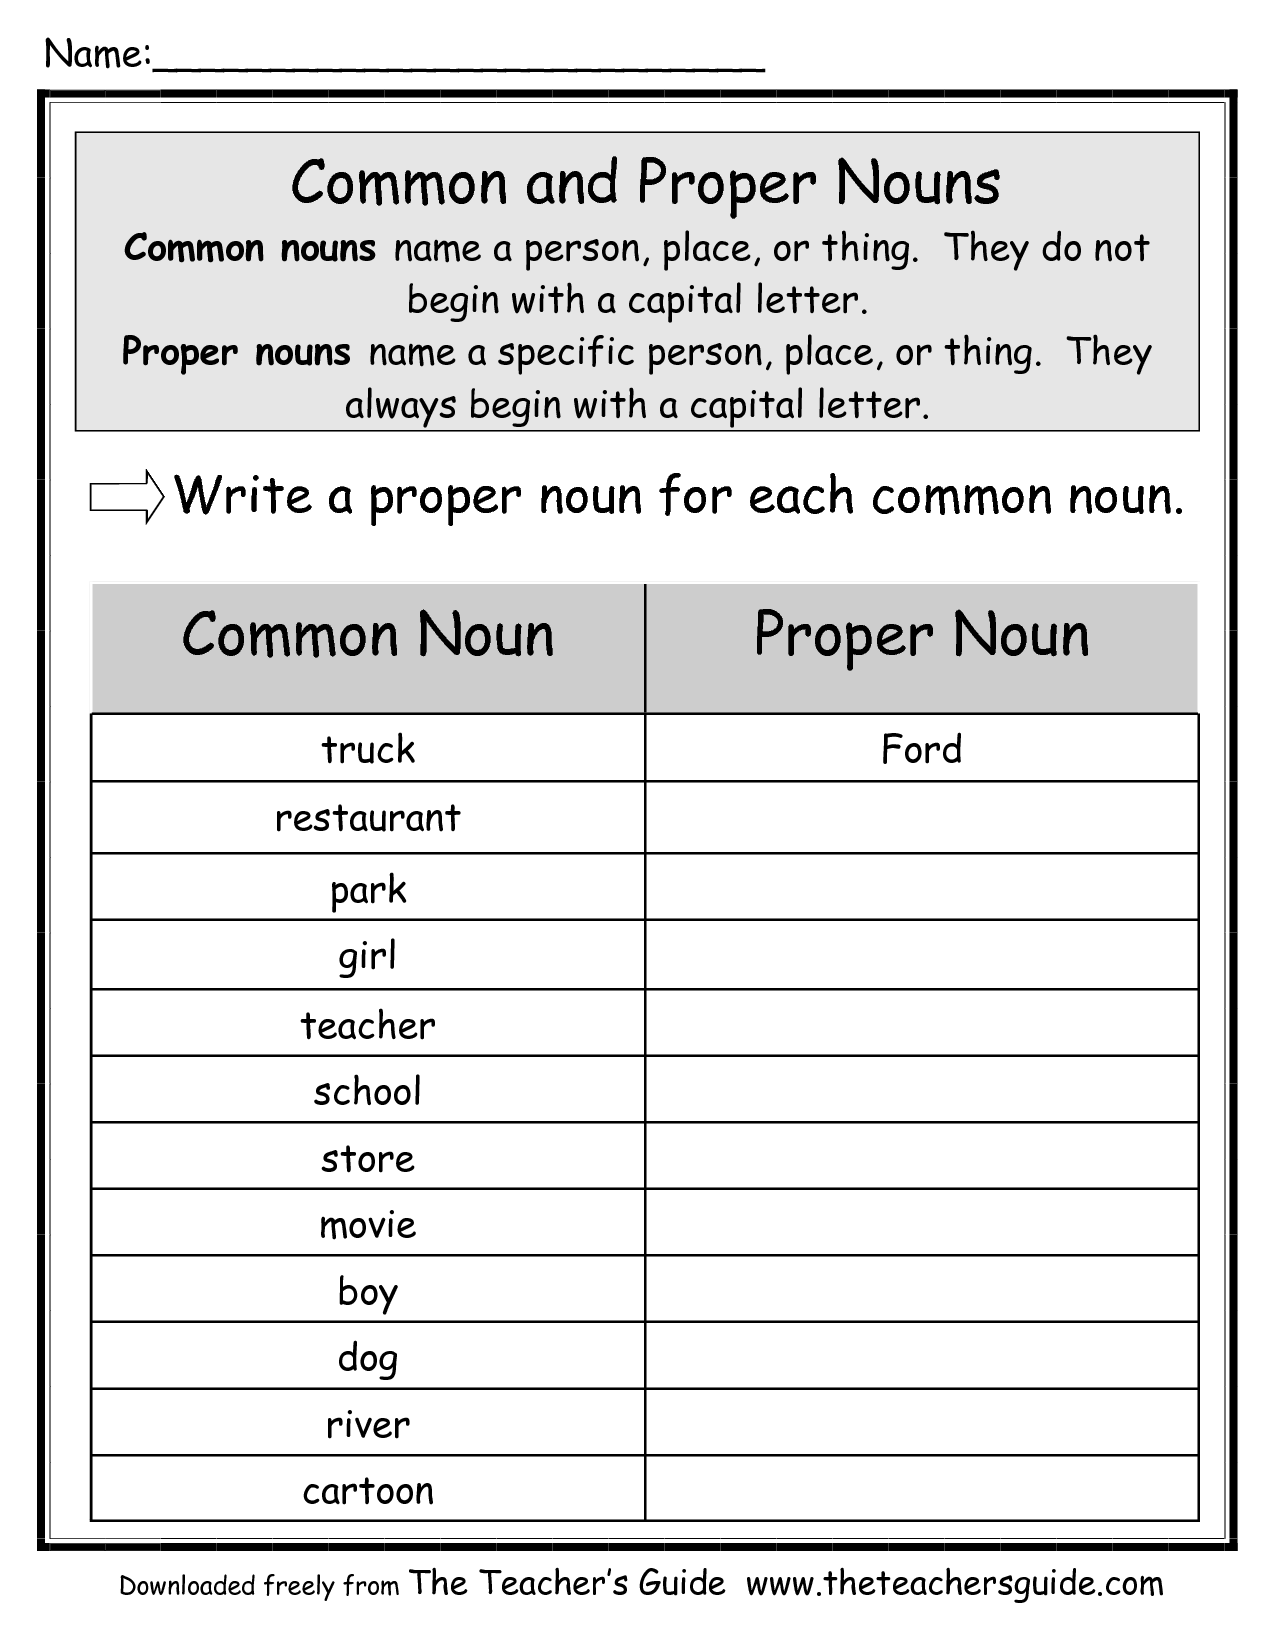 free-printable-common-and-proper-noun-worksheets-nouns-worksheet